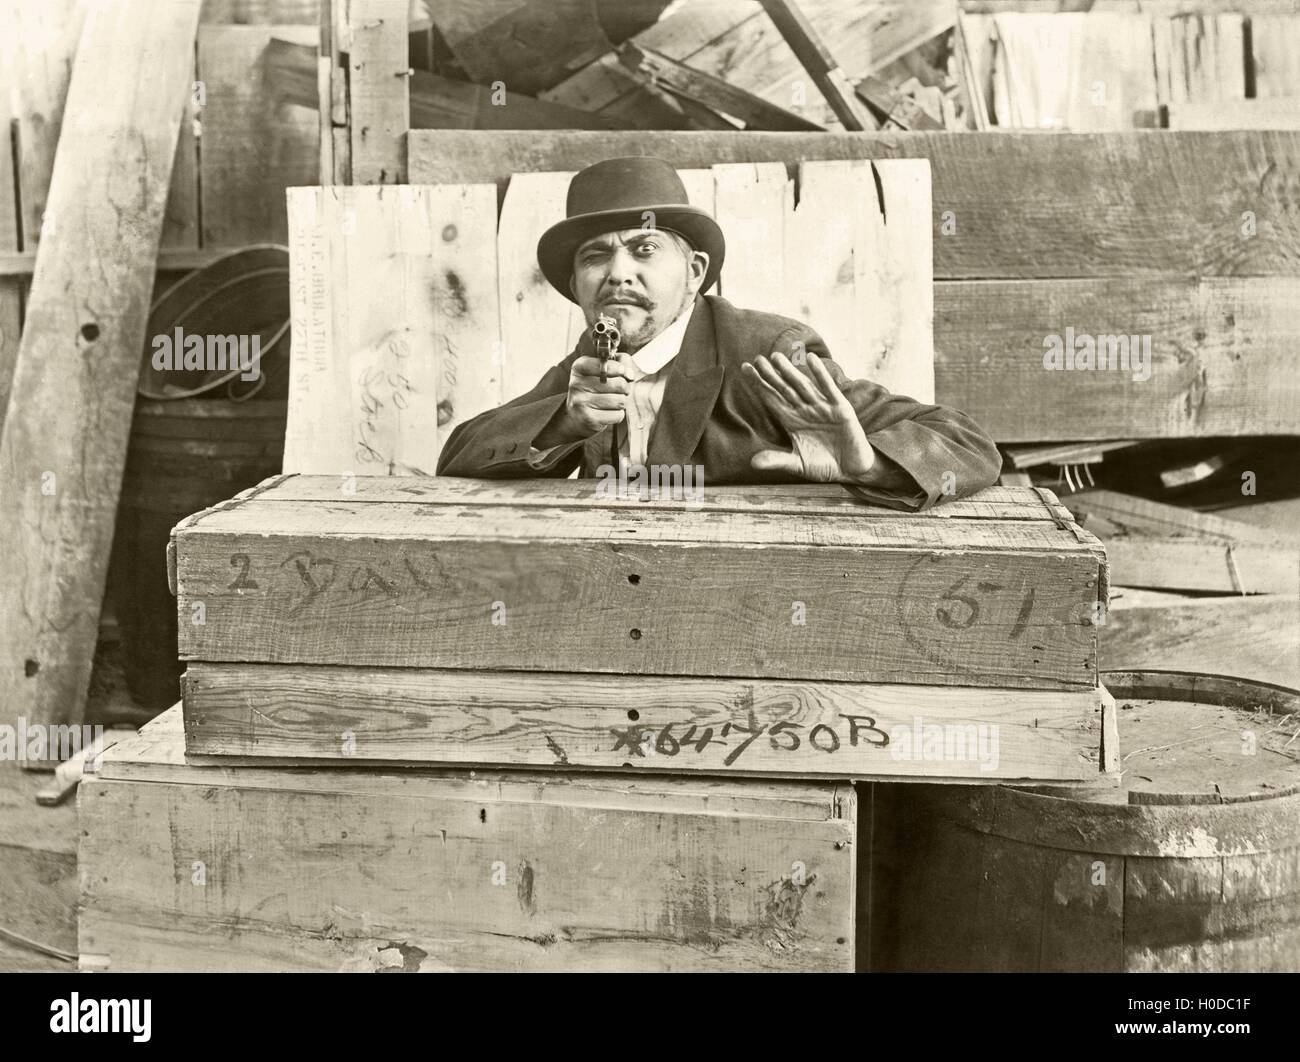 Cornered man behind wooden crates pointing gun Stock Photo